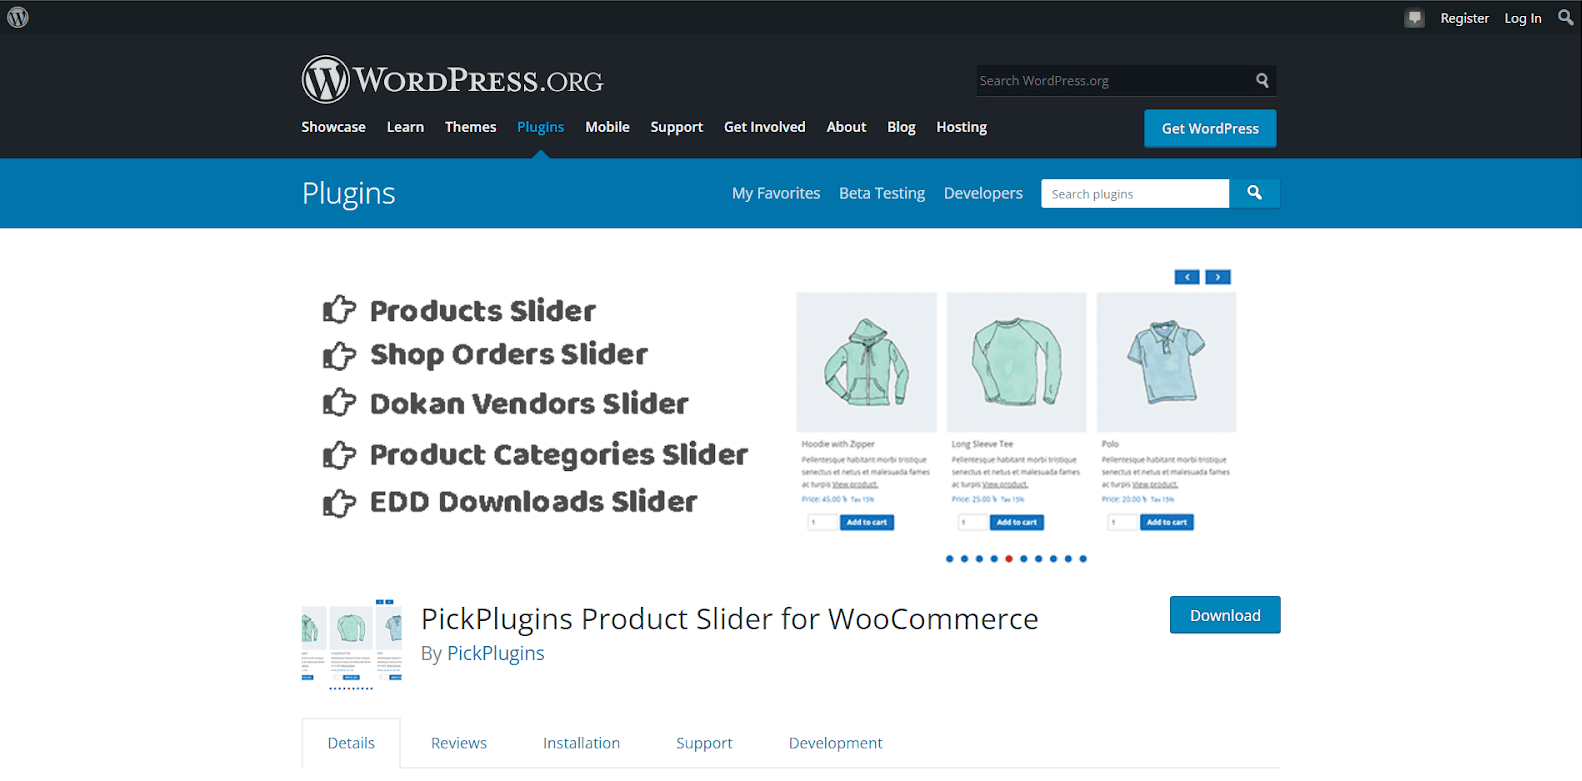 PickPlugins Product Slider for WooCommerce